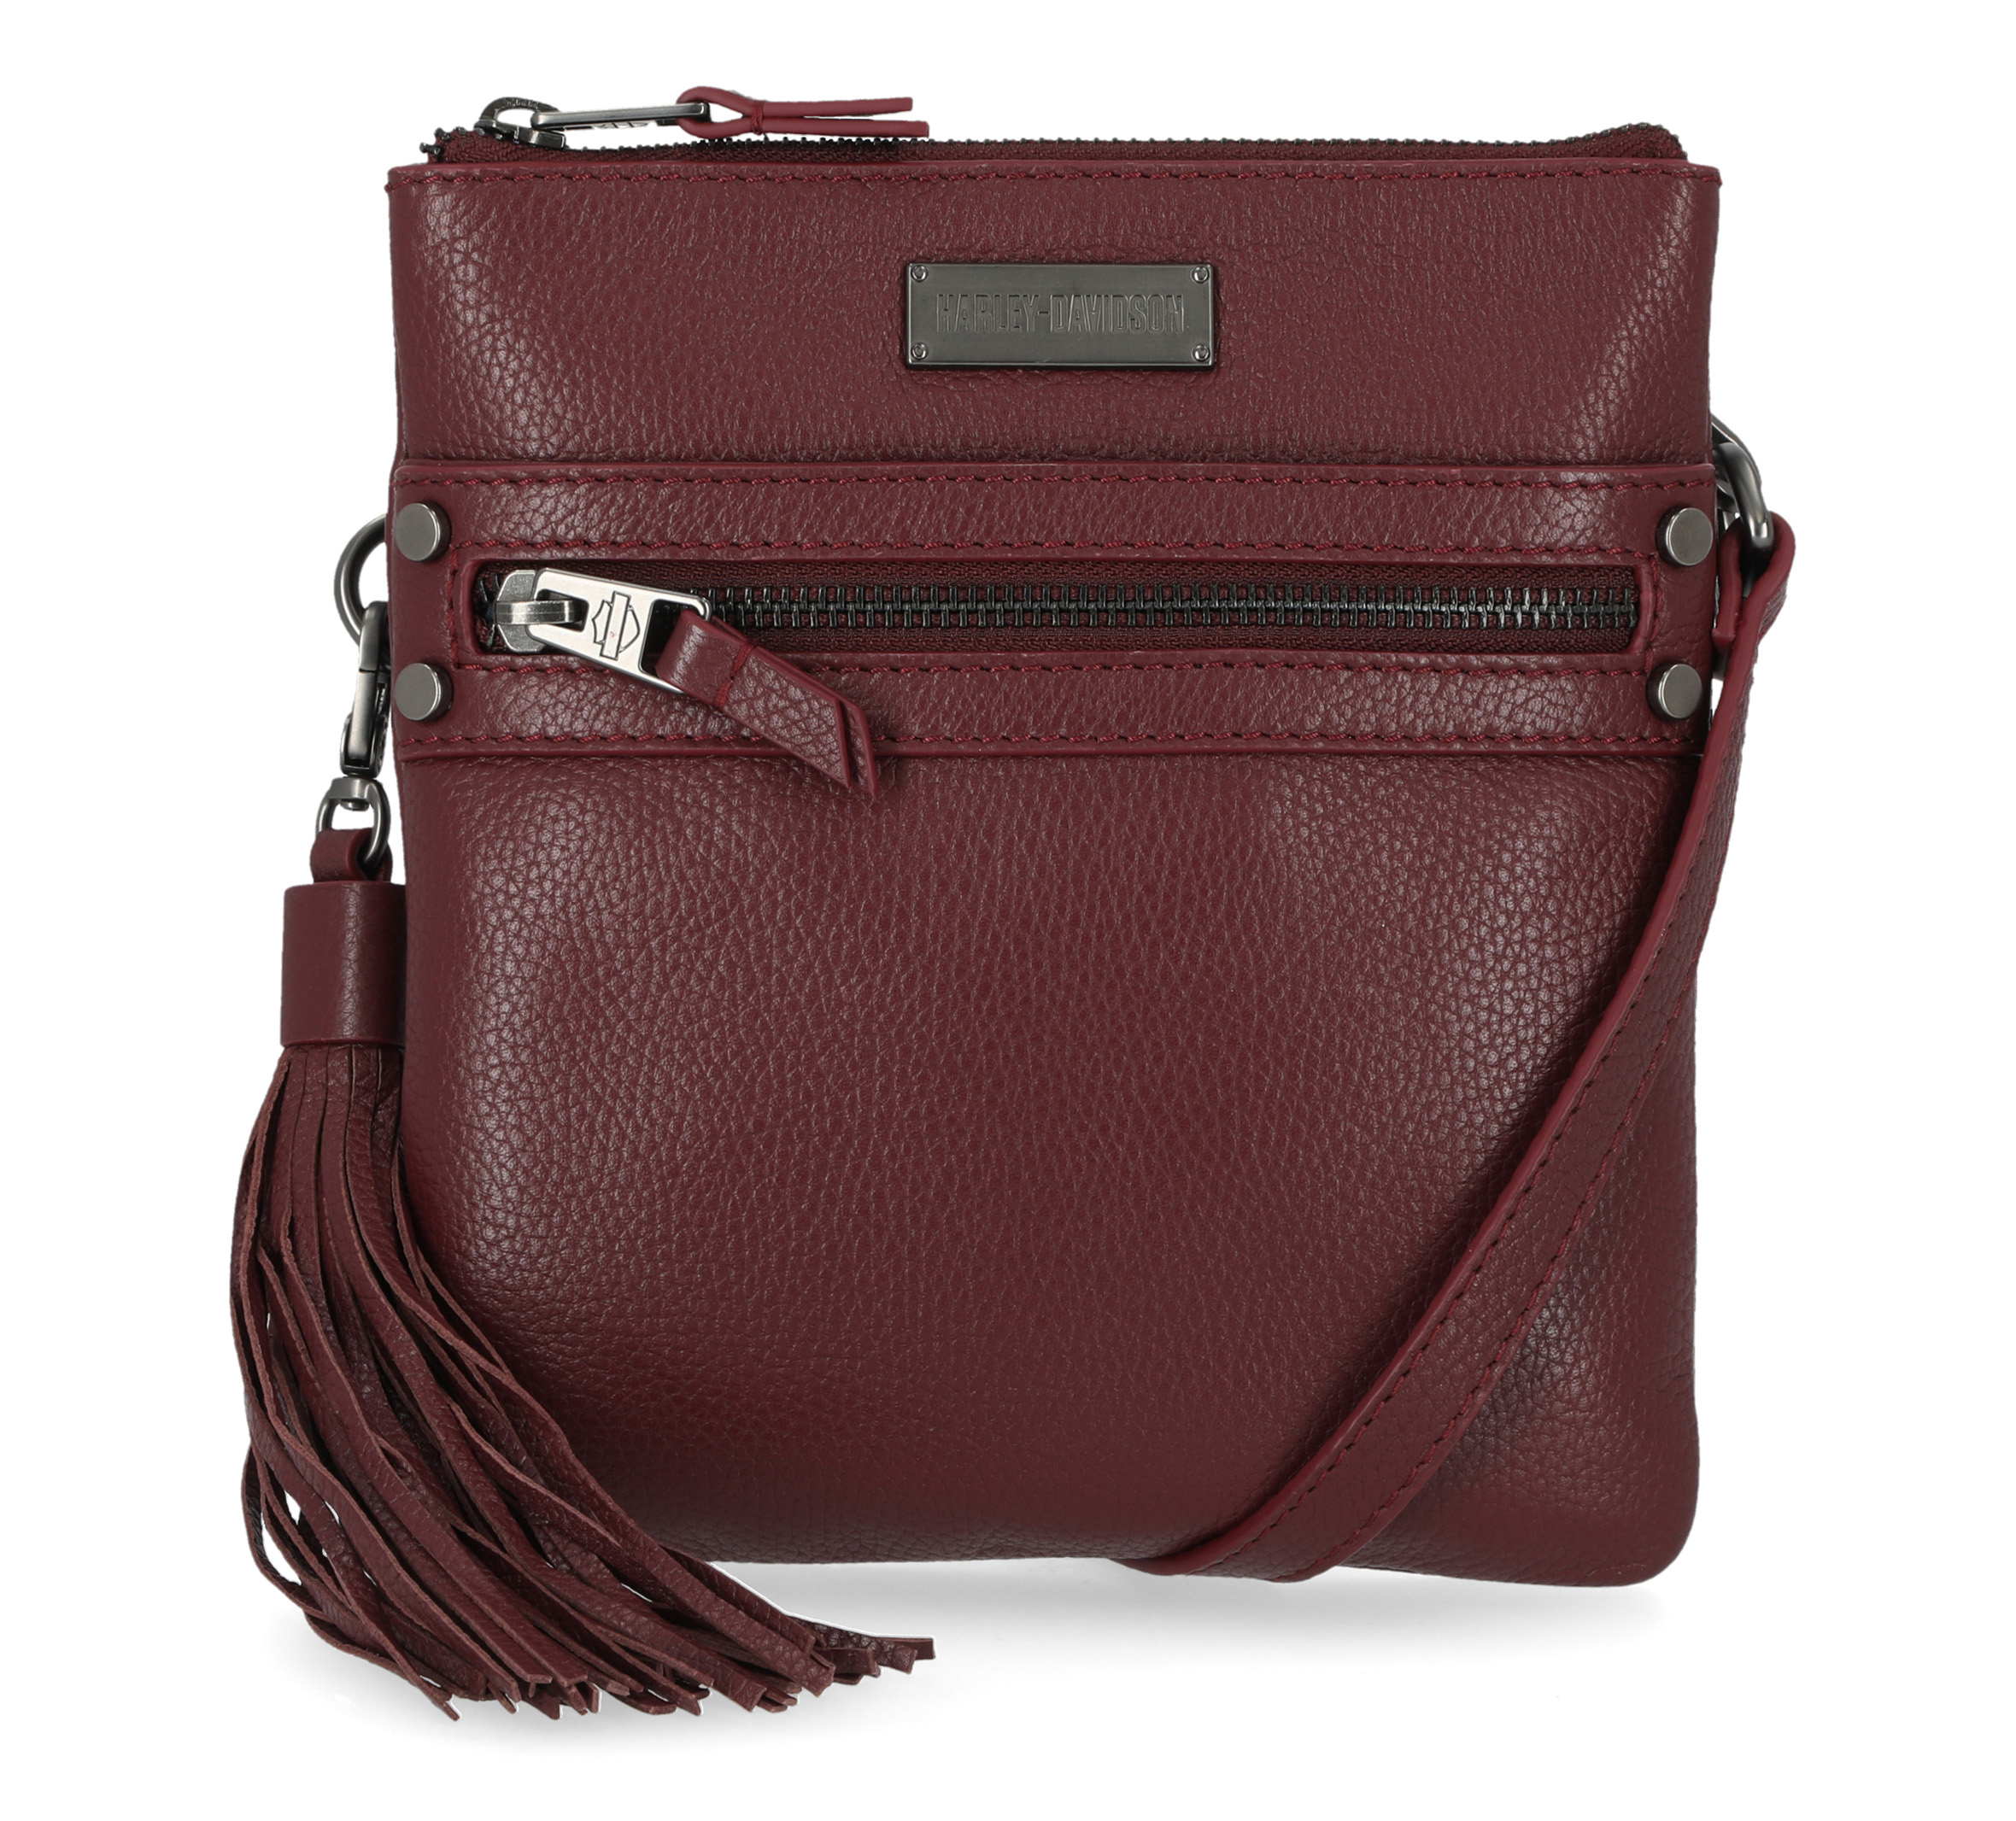 Vintage Crossbody Phone Bag for Women, Small Leather Shoulder Purse and  Handbag with Tassel&Rivet Decoration